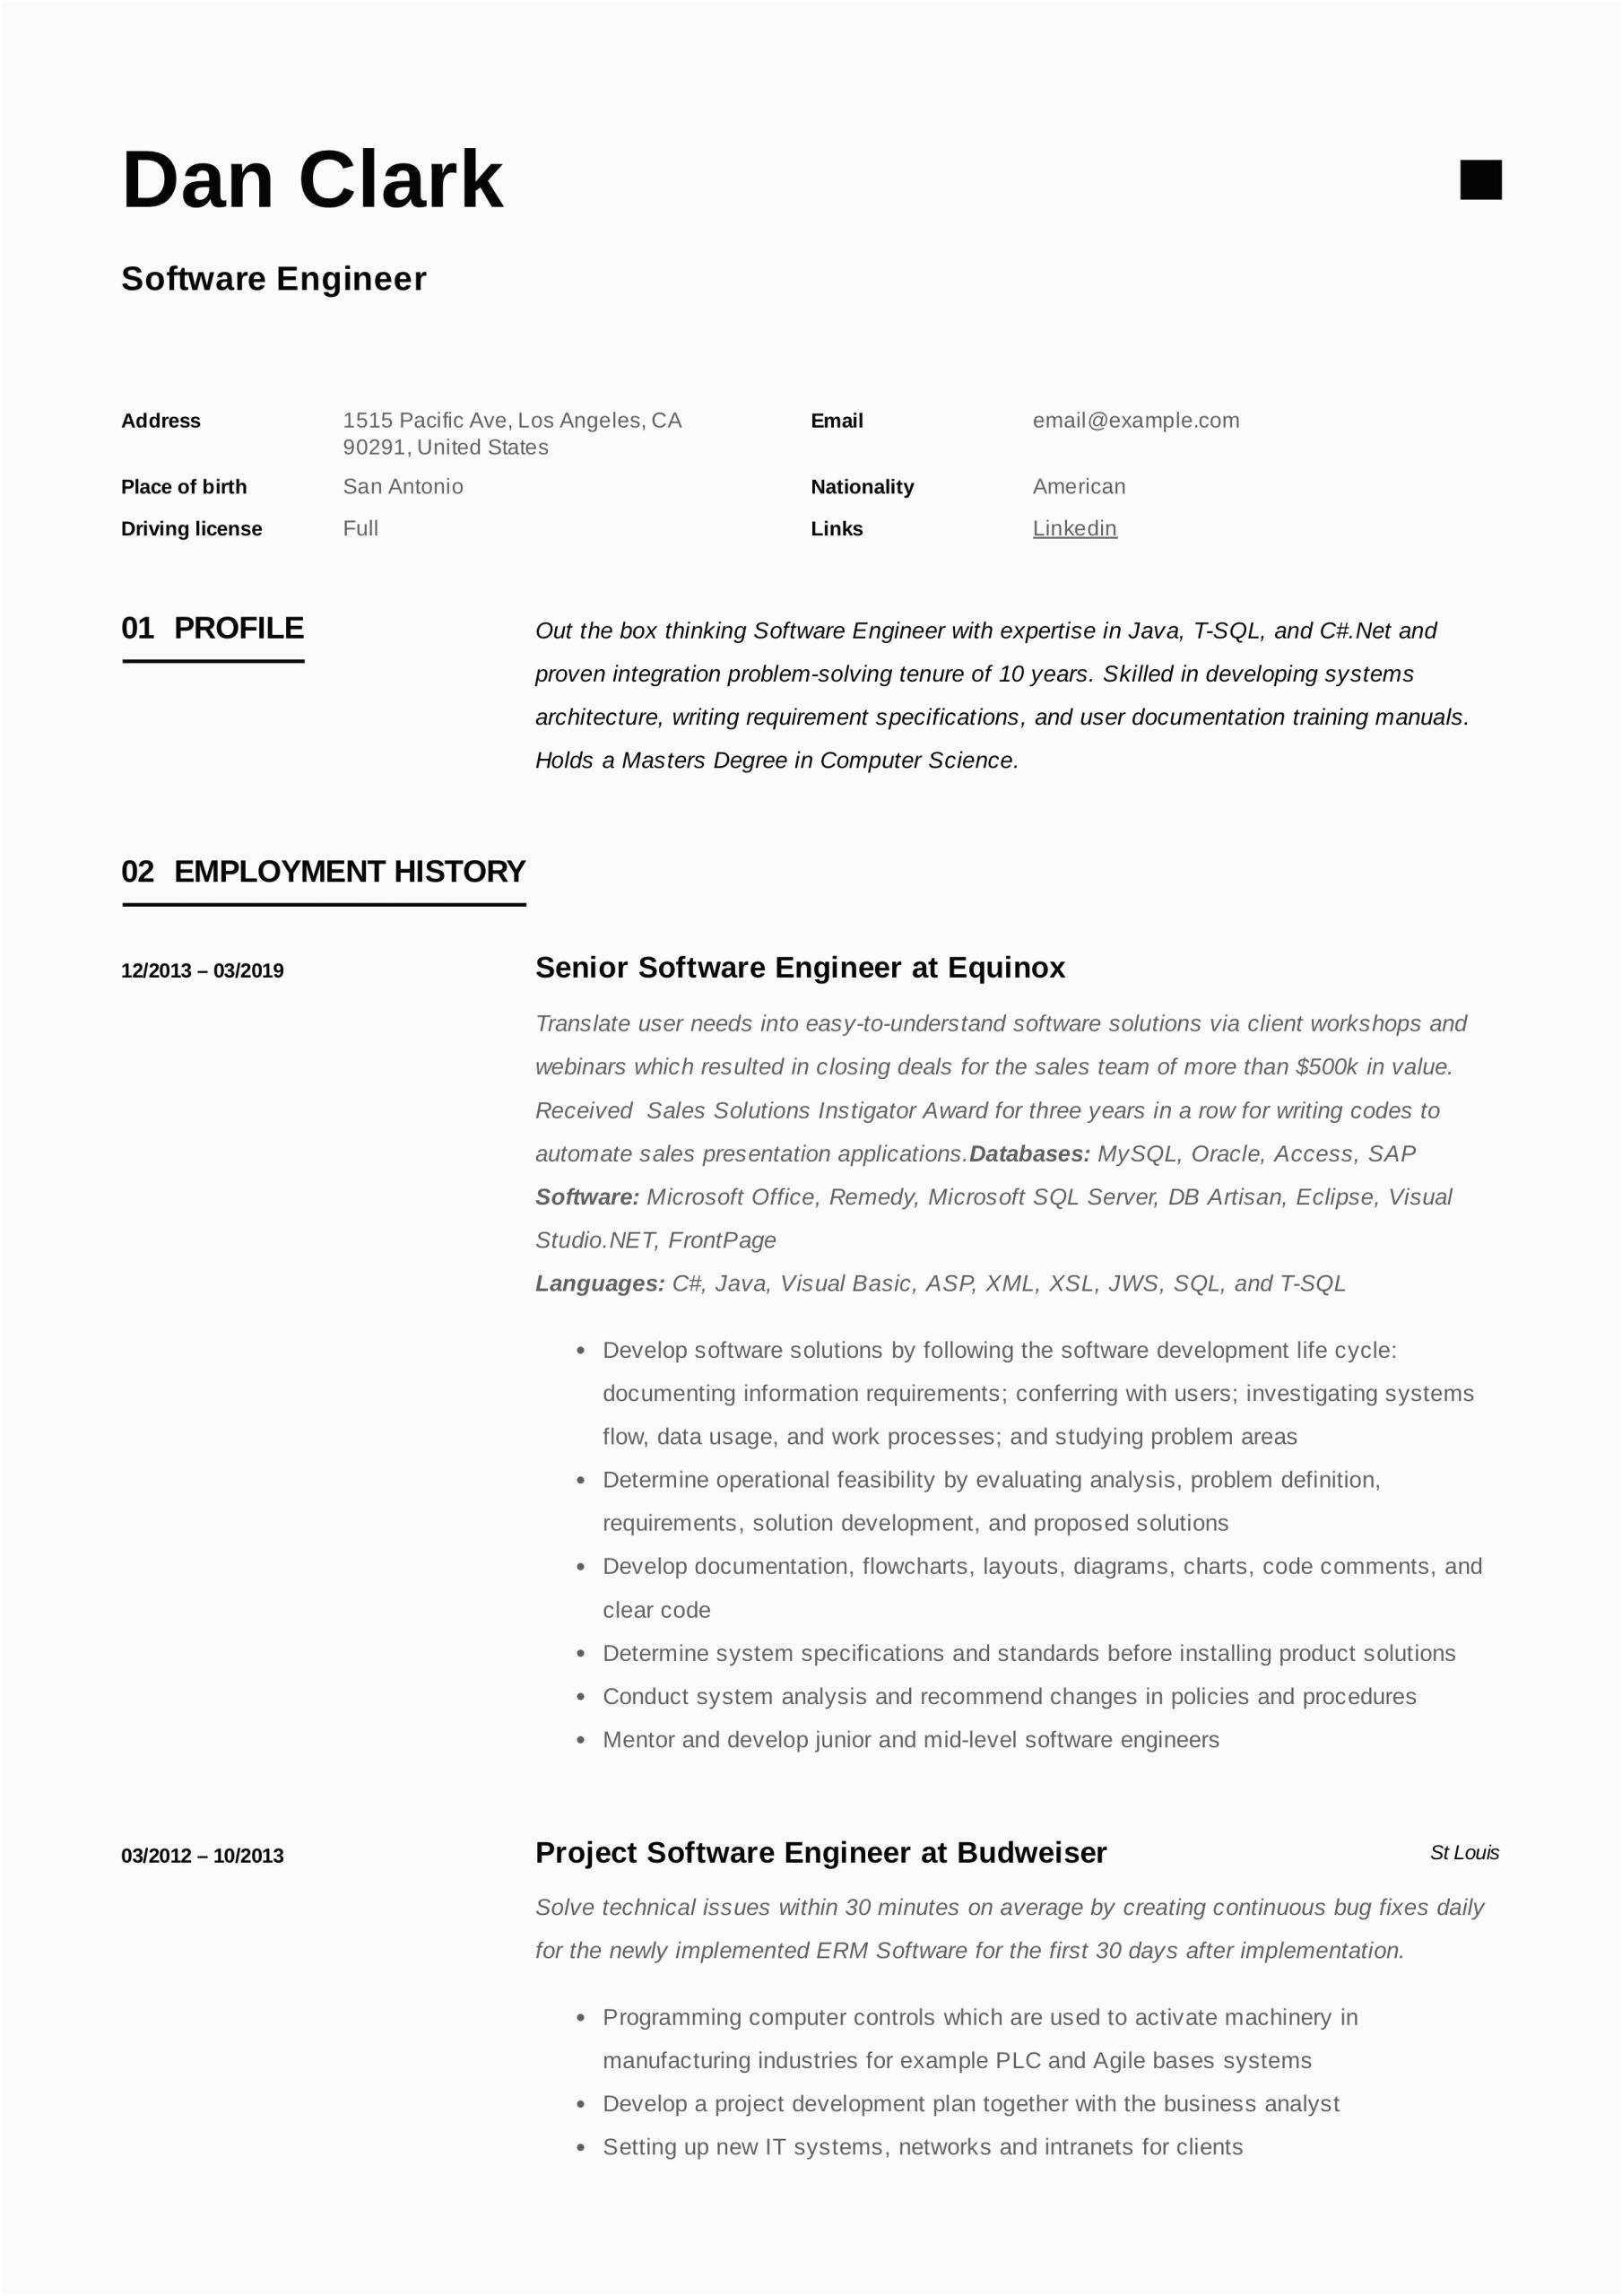 10 years experience software engineer resume